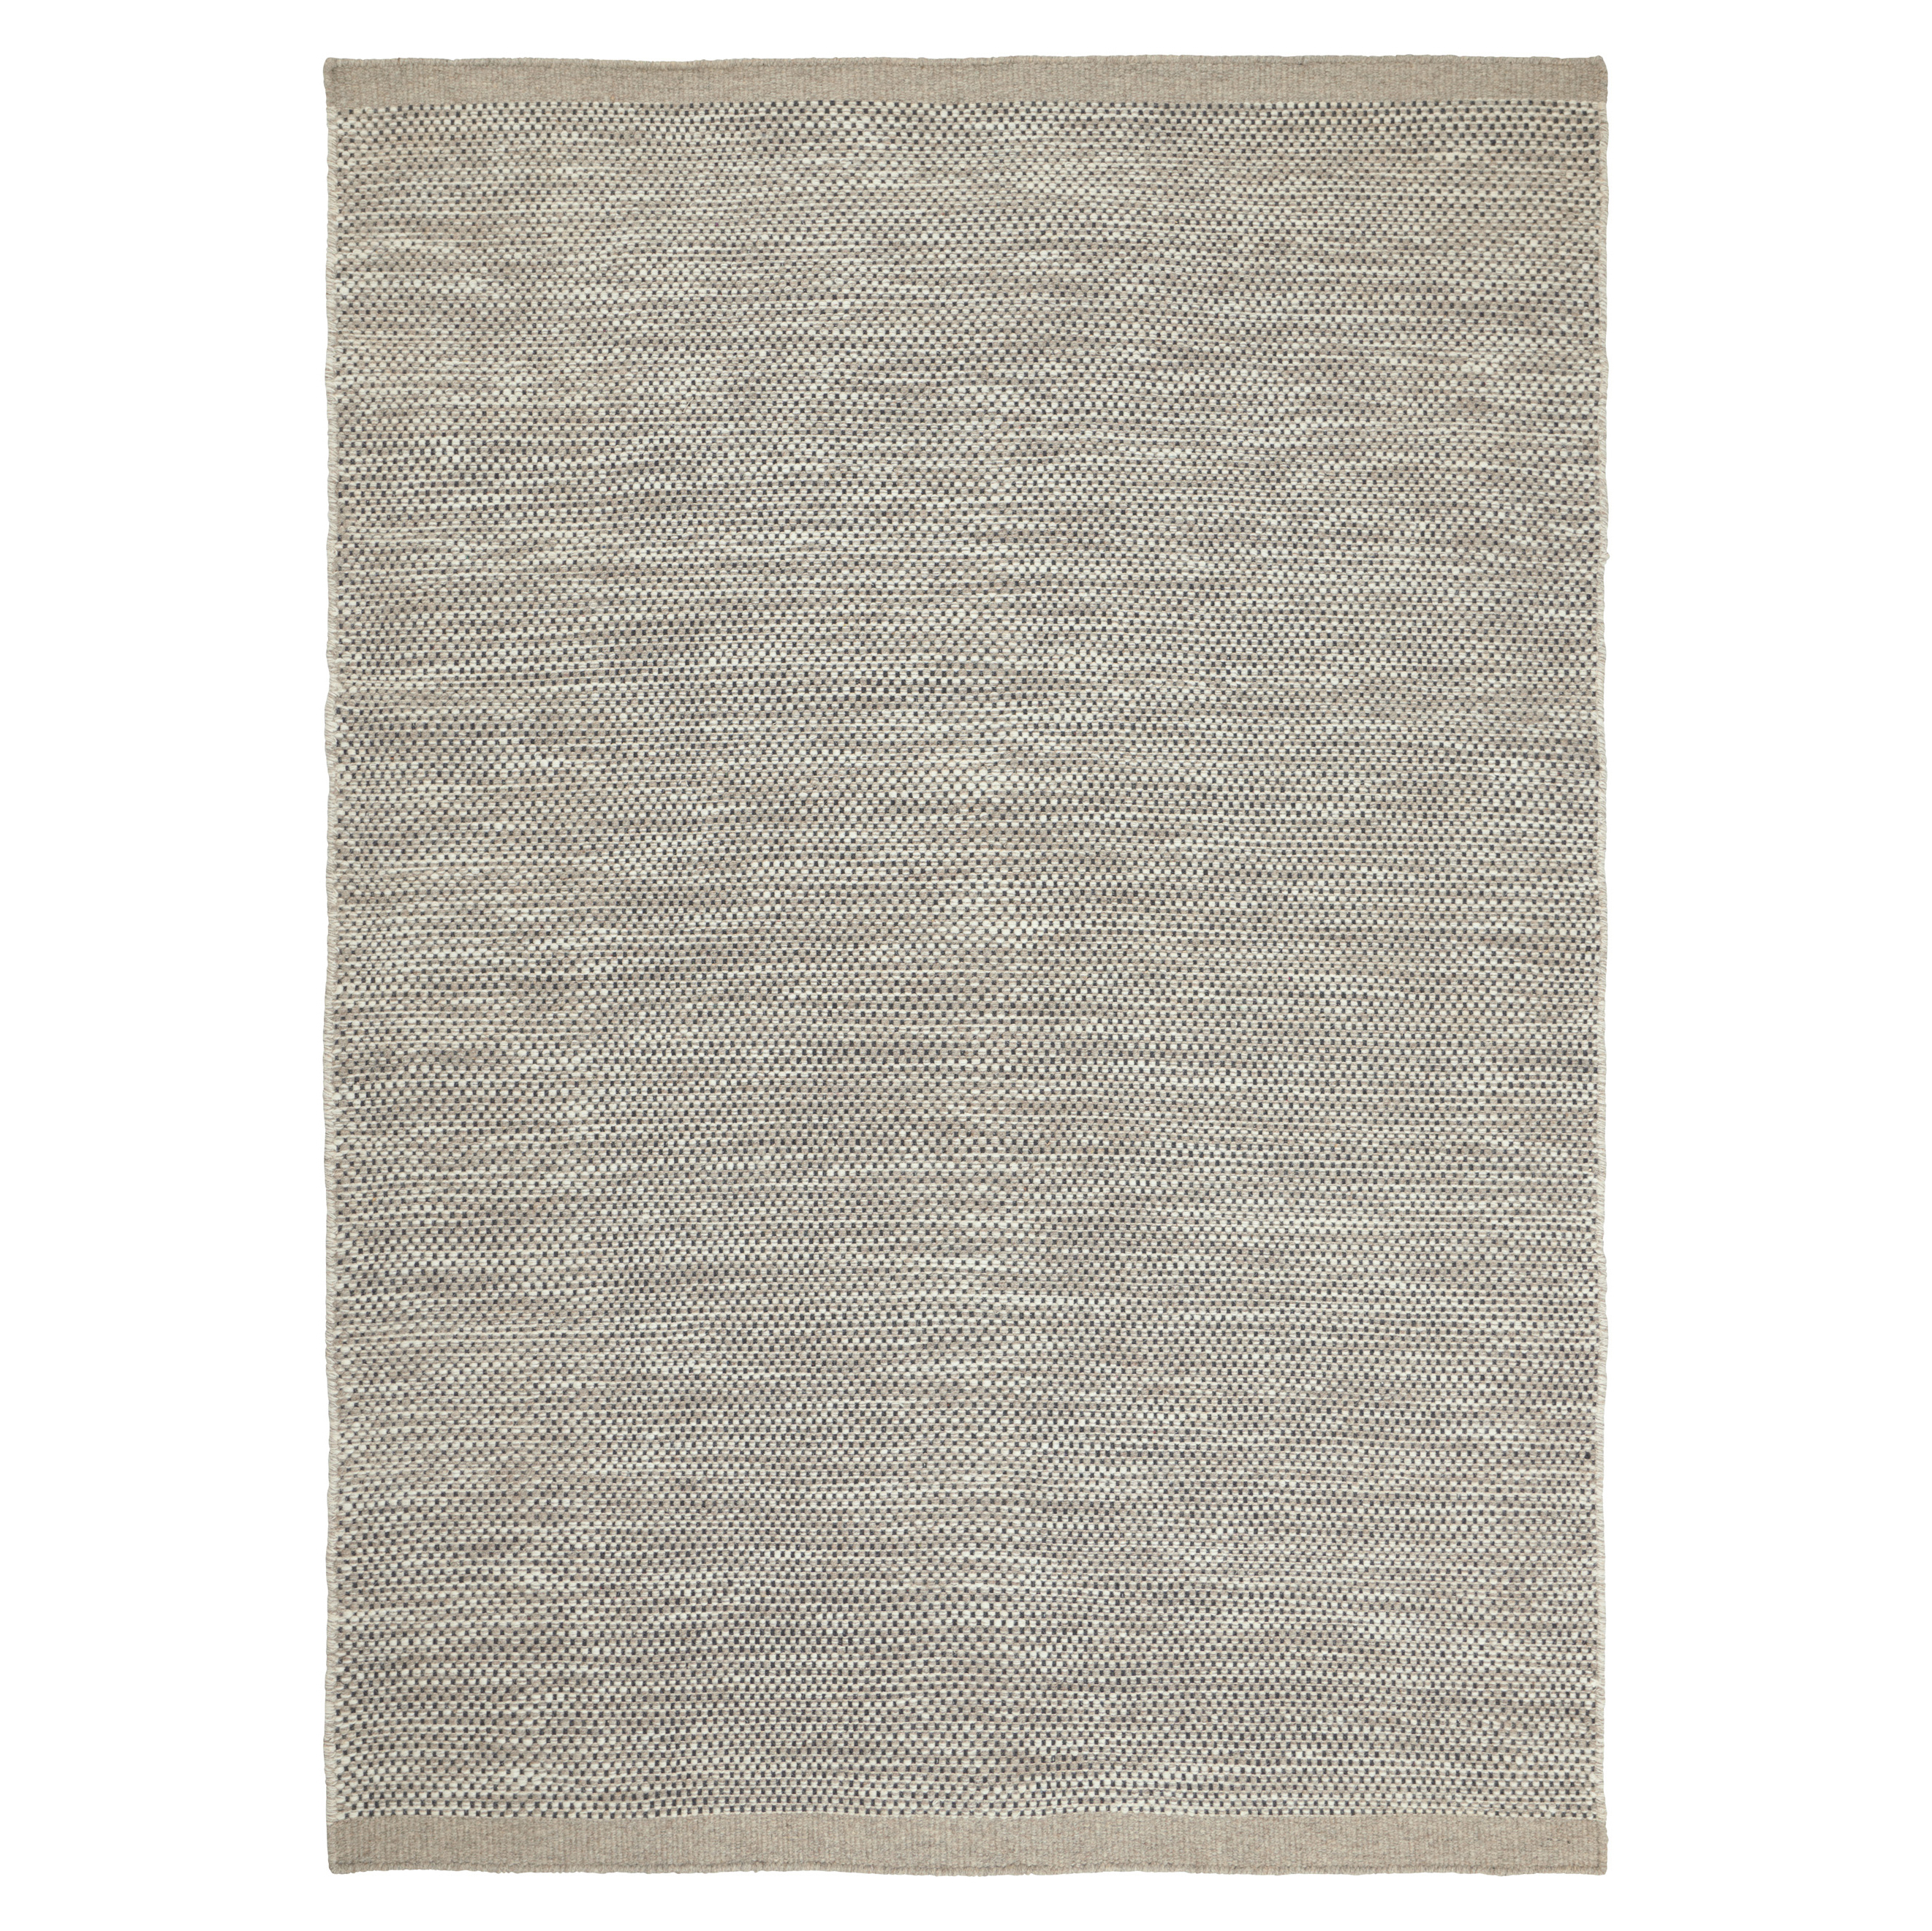 Asko rug 200x300 cm from Design